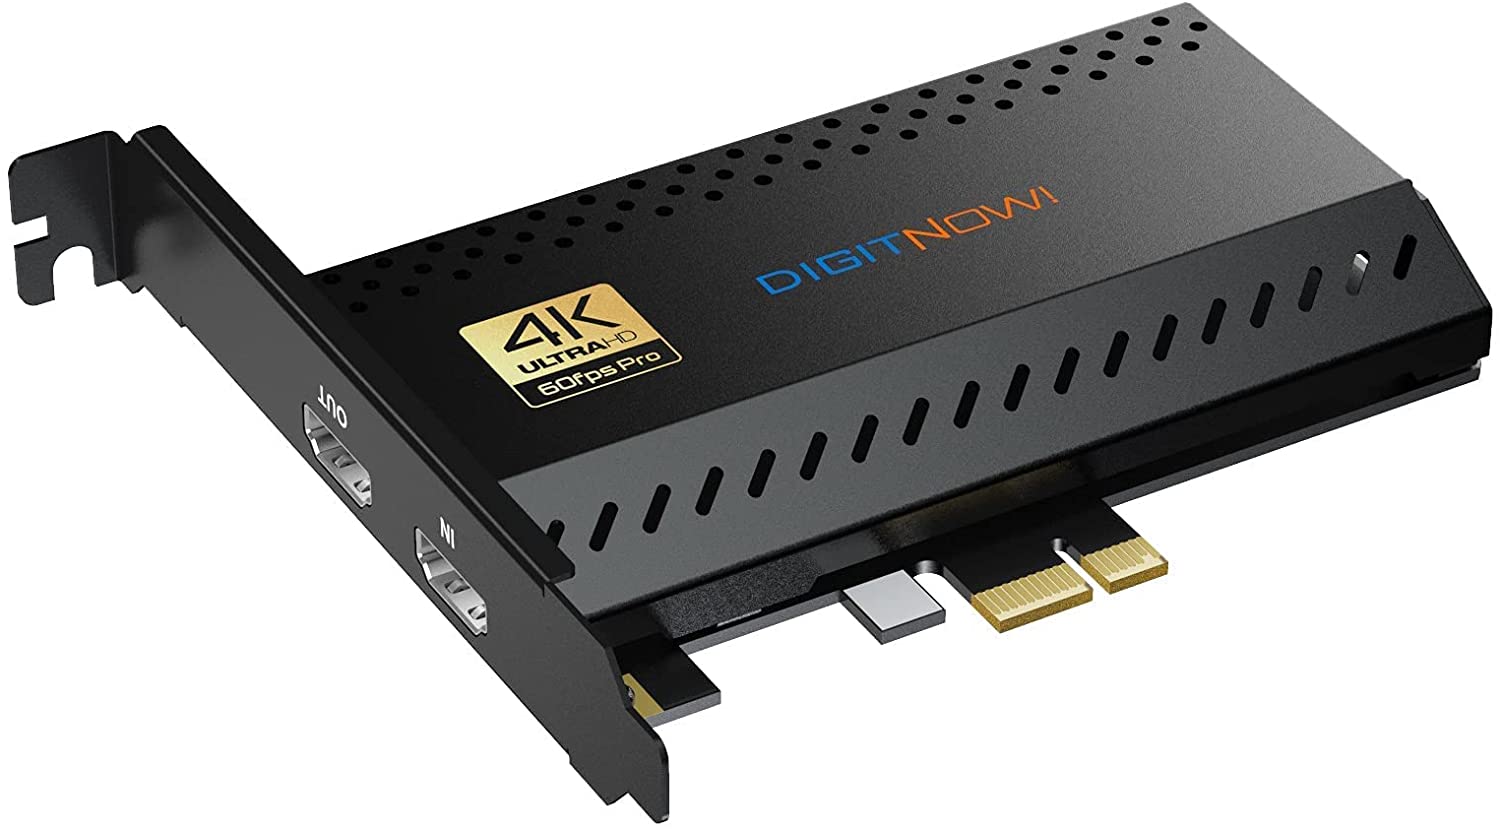 DIGITNOW 4K60 Pro PCIe Capture Card 4K60 Game Capture, Ultra-Low Laten